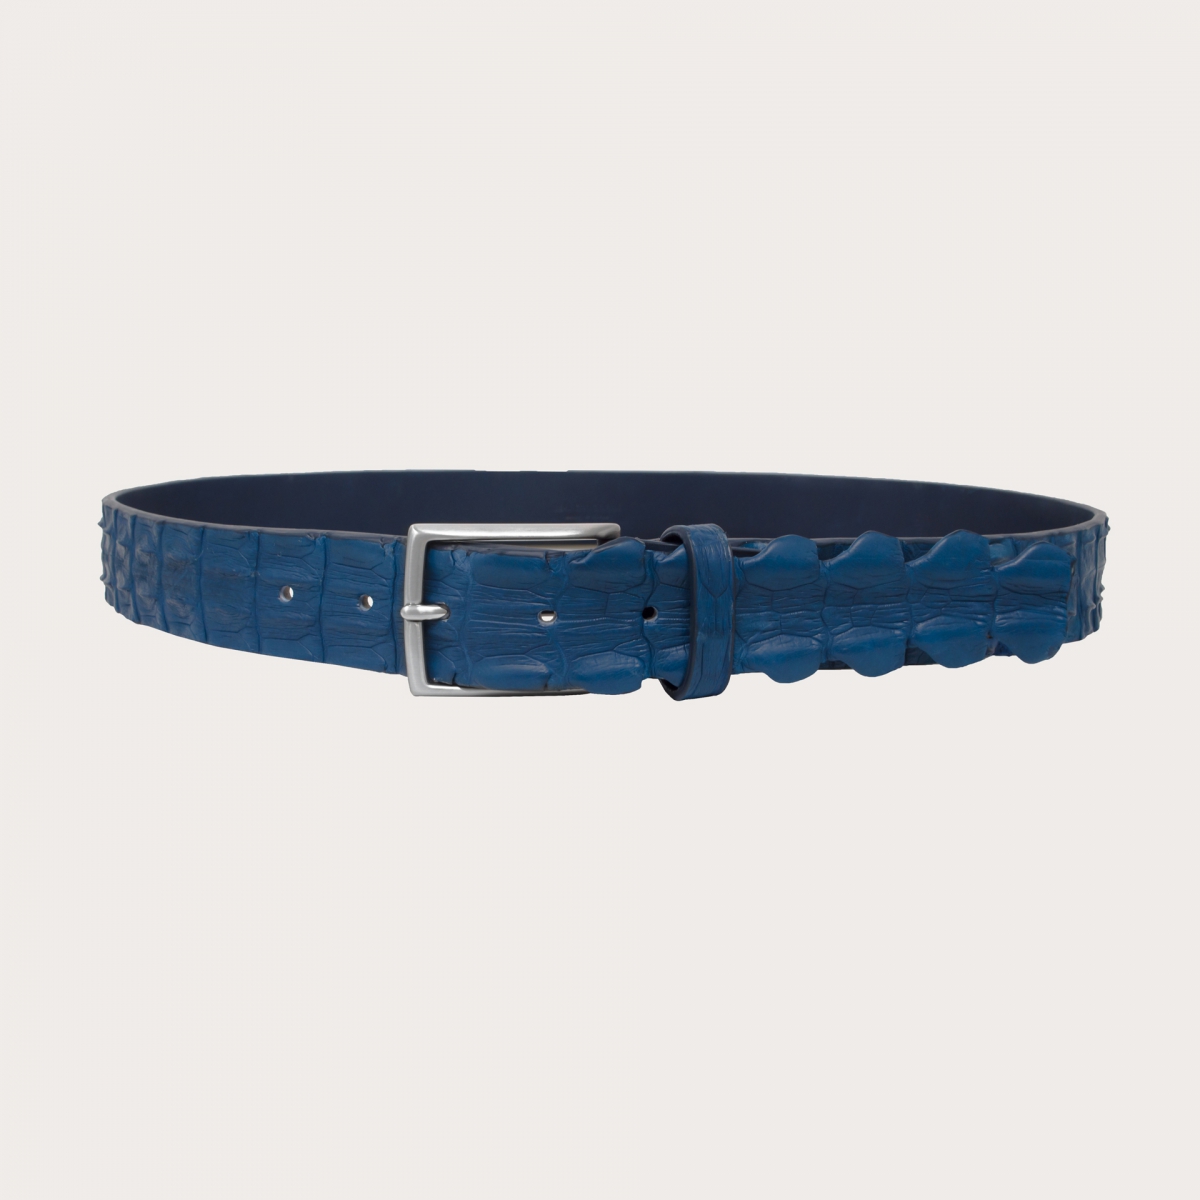 BRUCLE Thin belt in blue crocodile leather